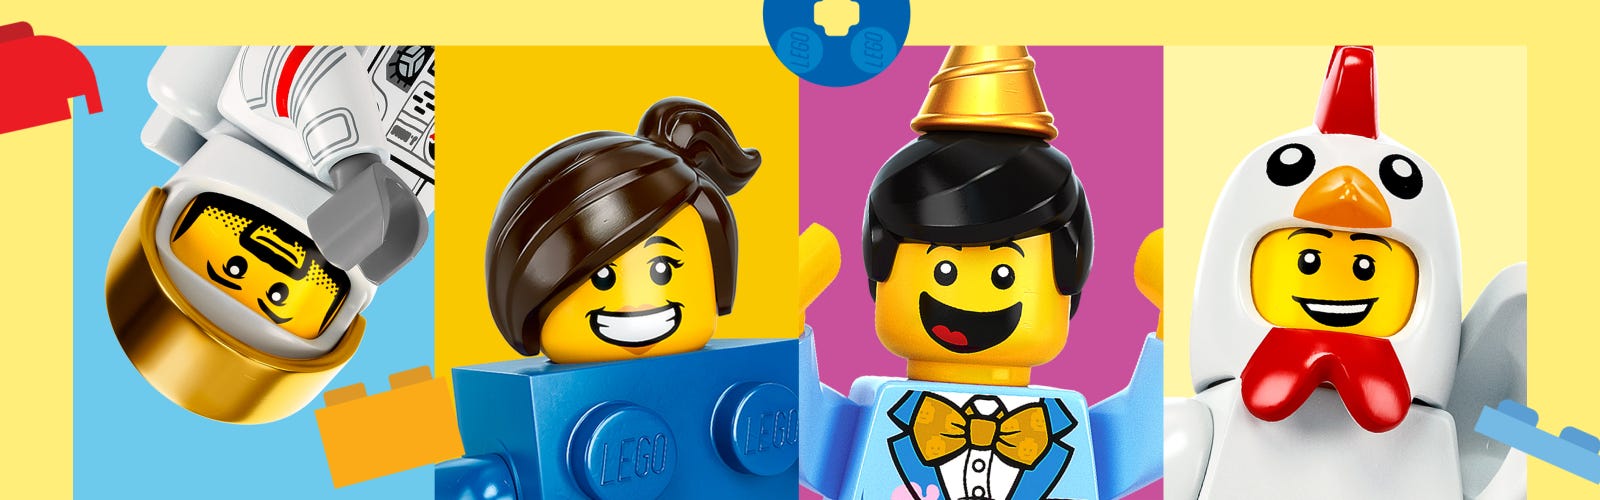 Lego - Free people icons